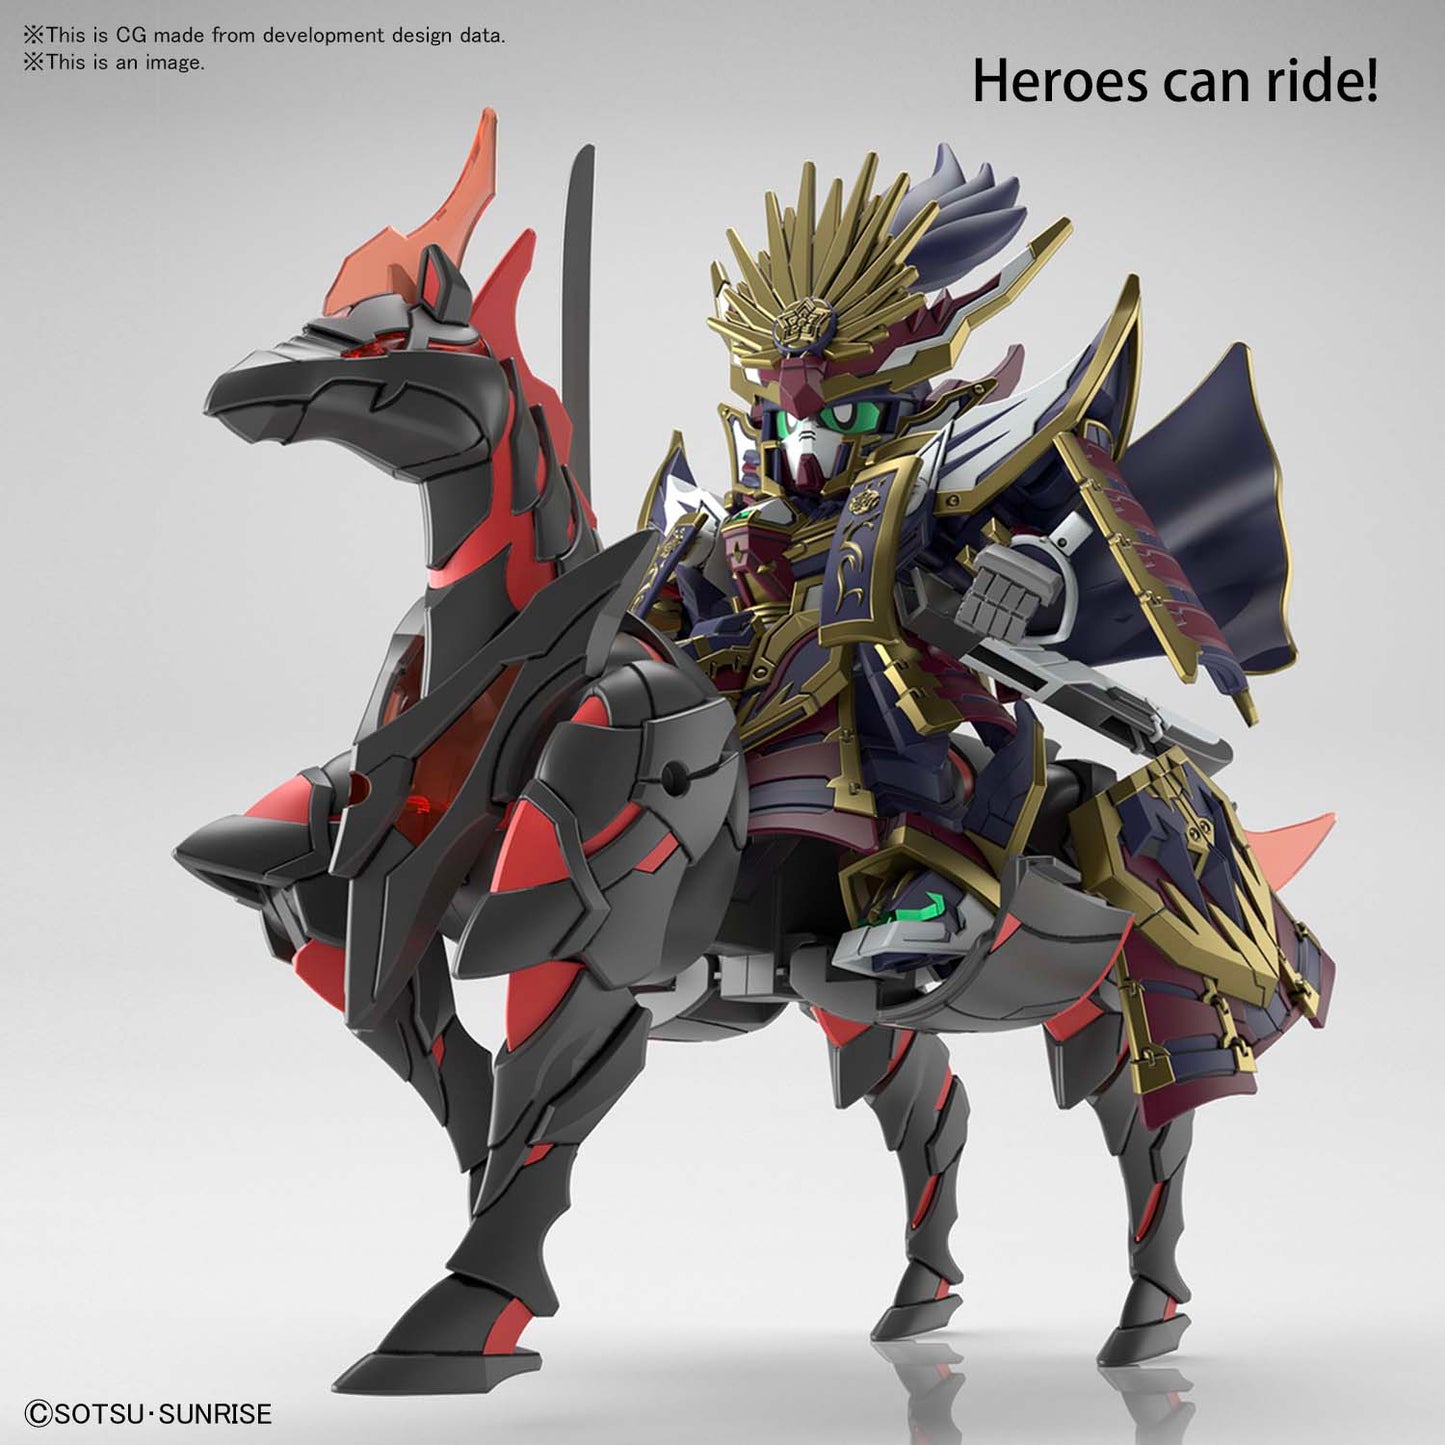 SDW HEROES WAR HORSE